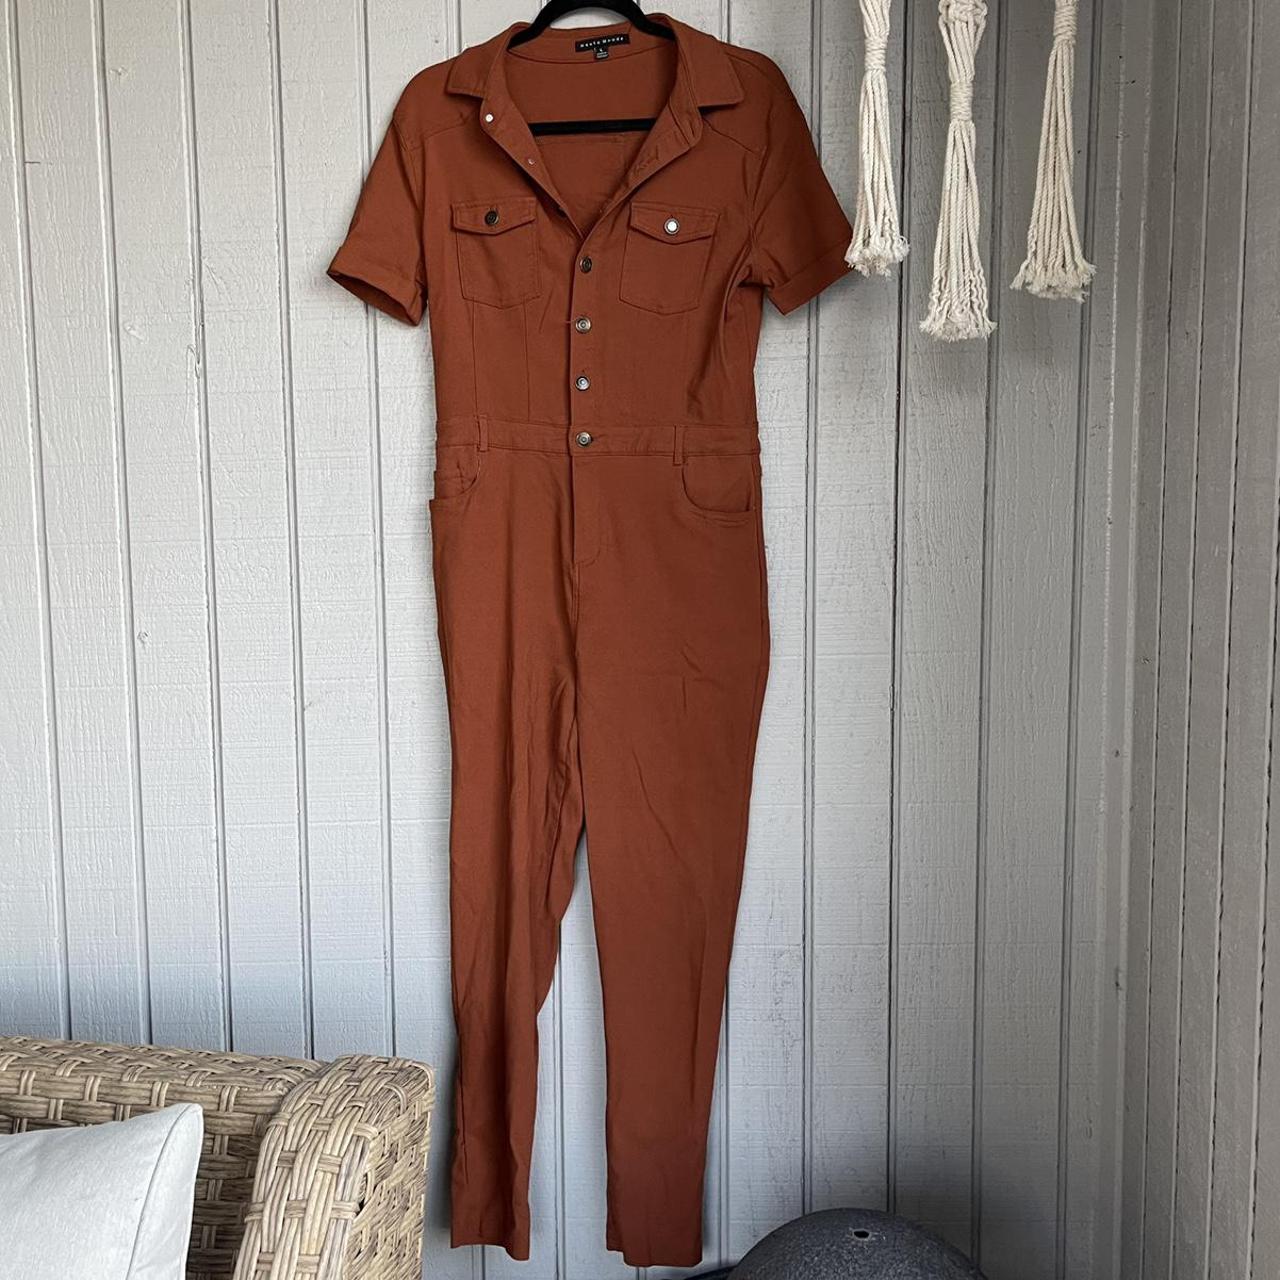 American Vintage Women's Orange and Tan Dress (3)